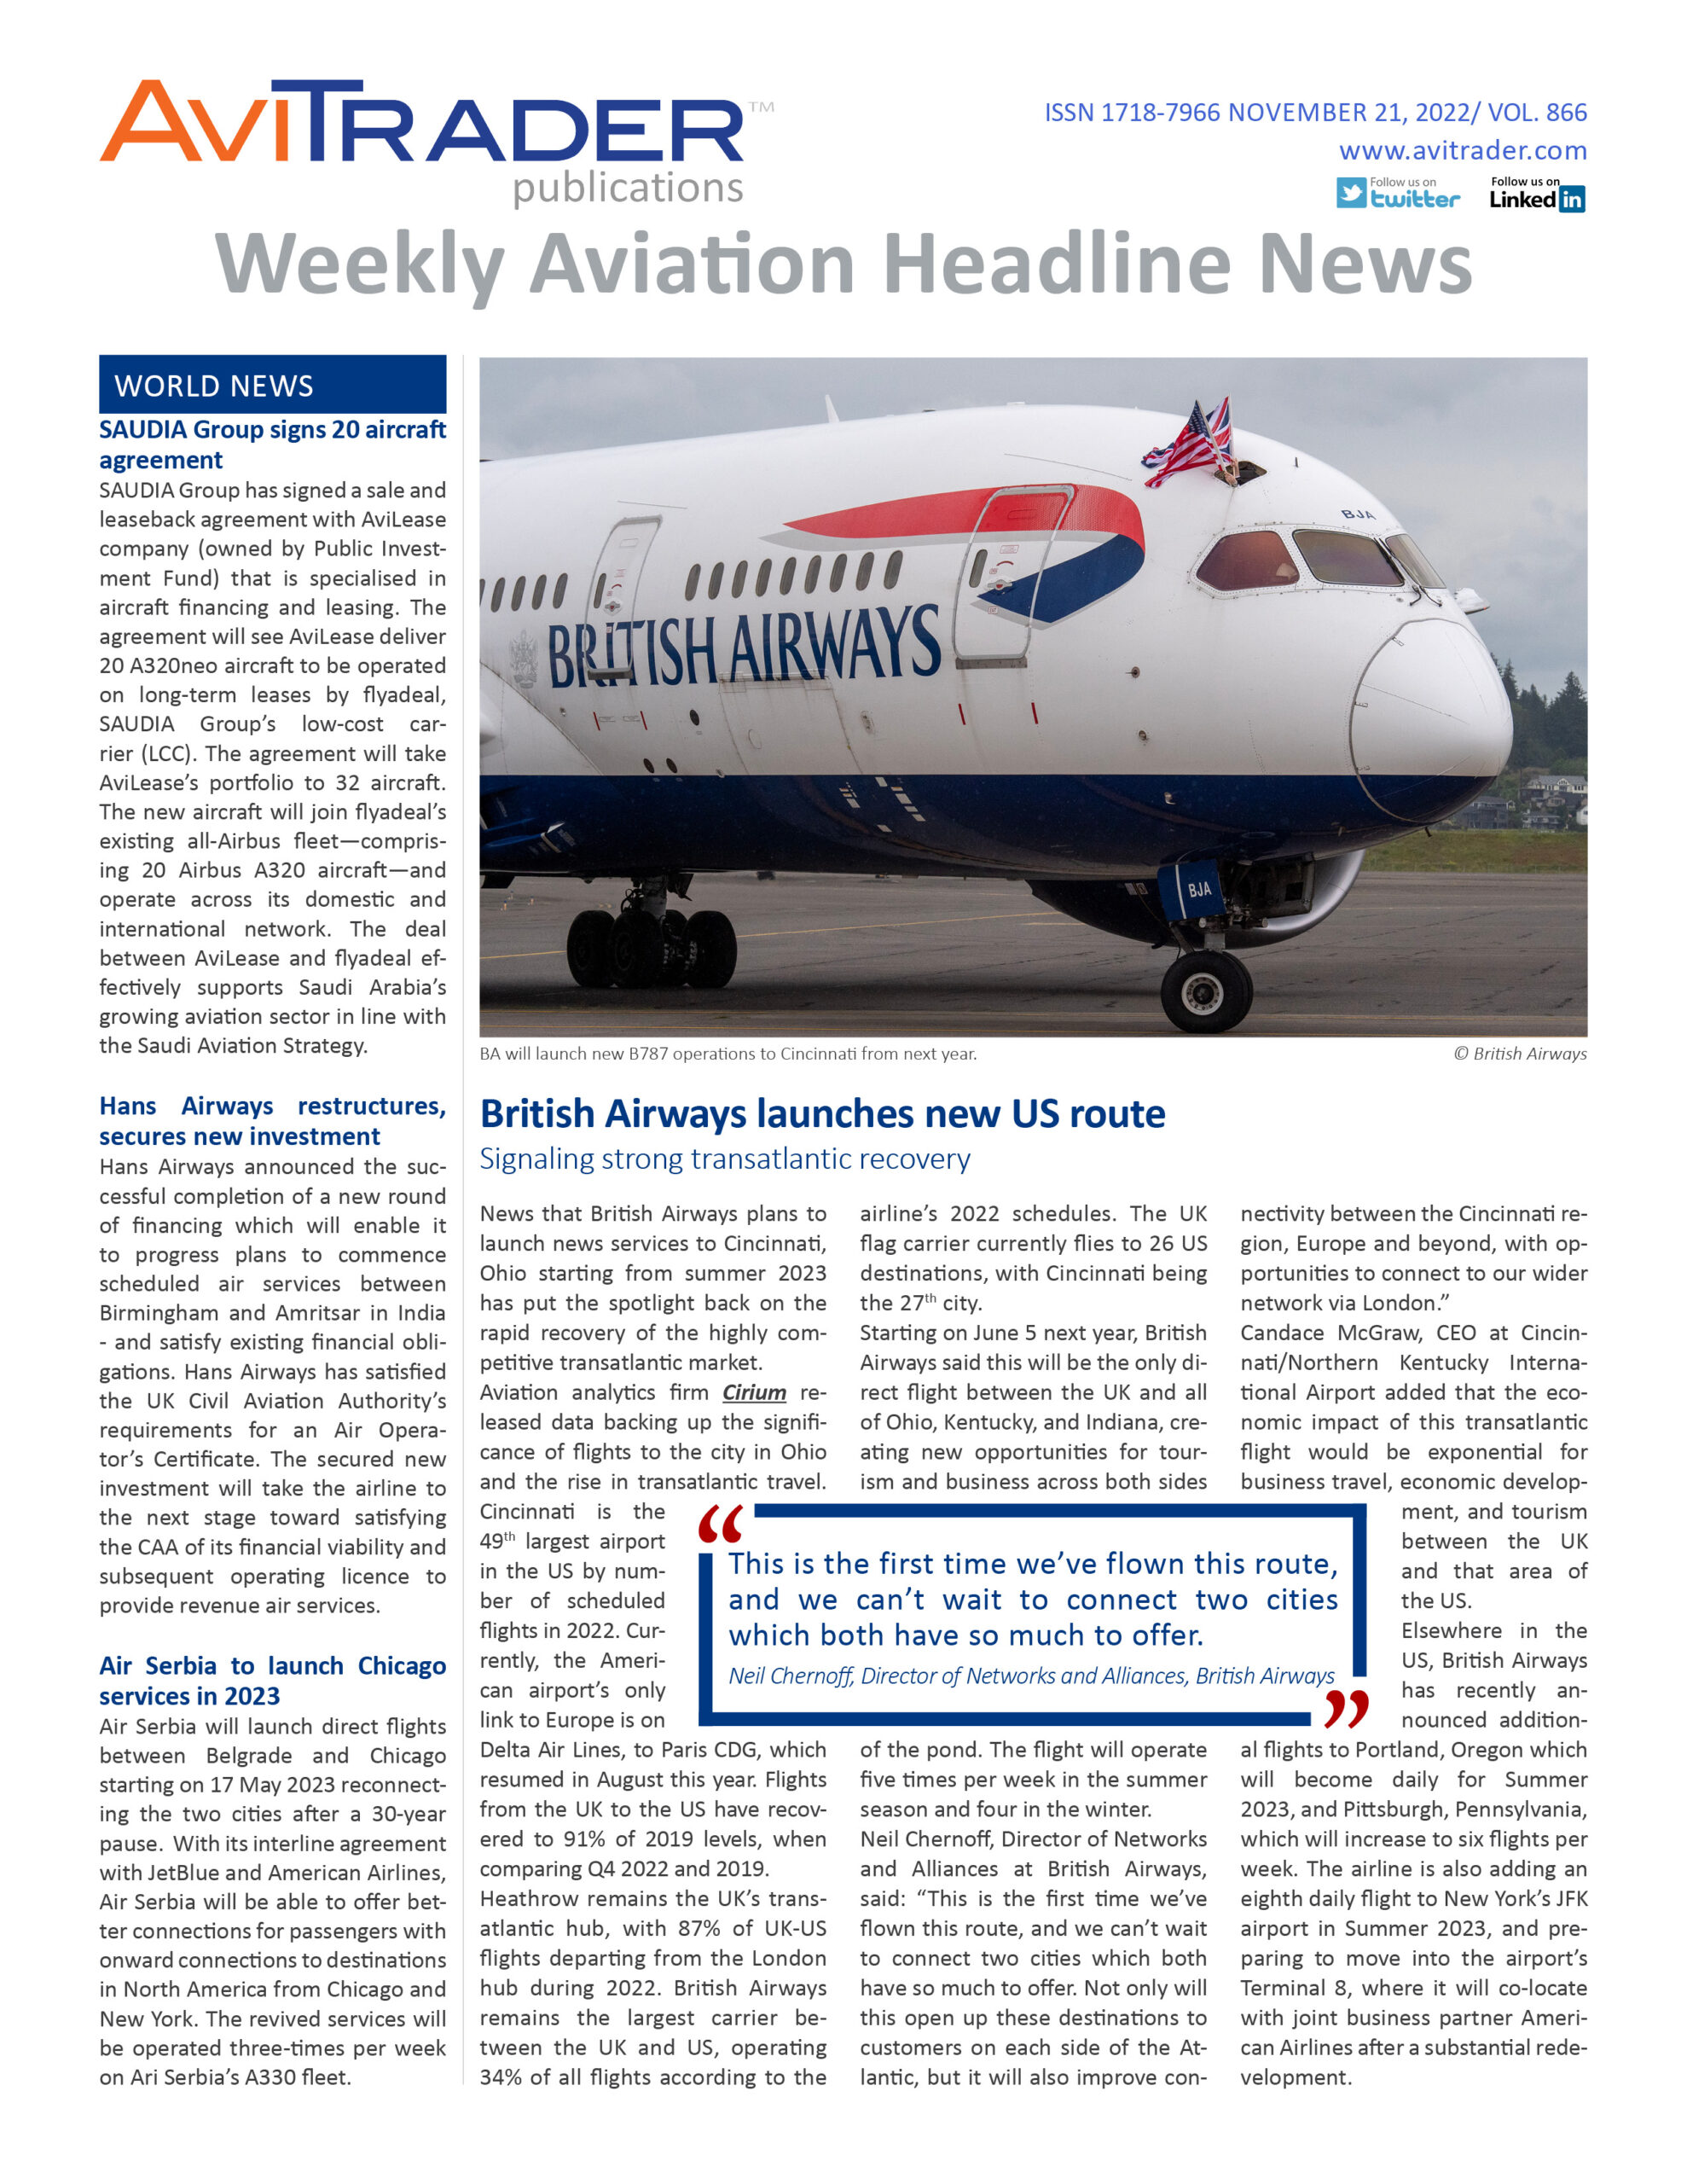 AviTrader_Weekly_Headline_News_Cover_2022-11-21